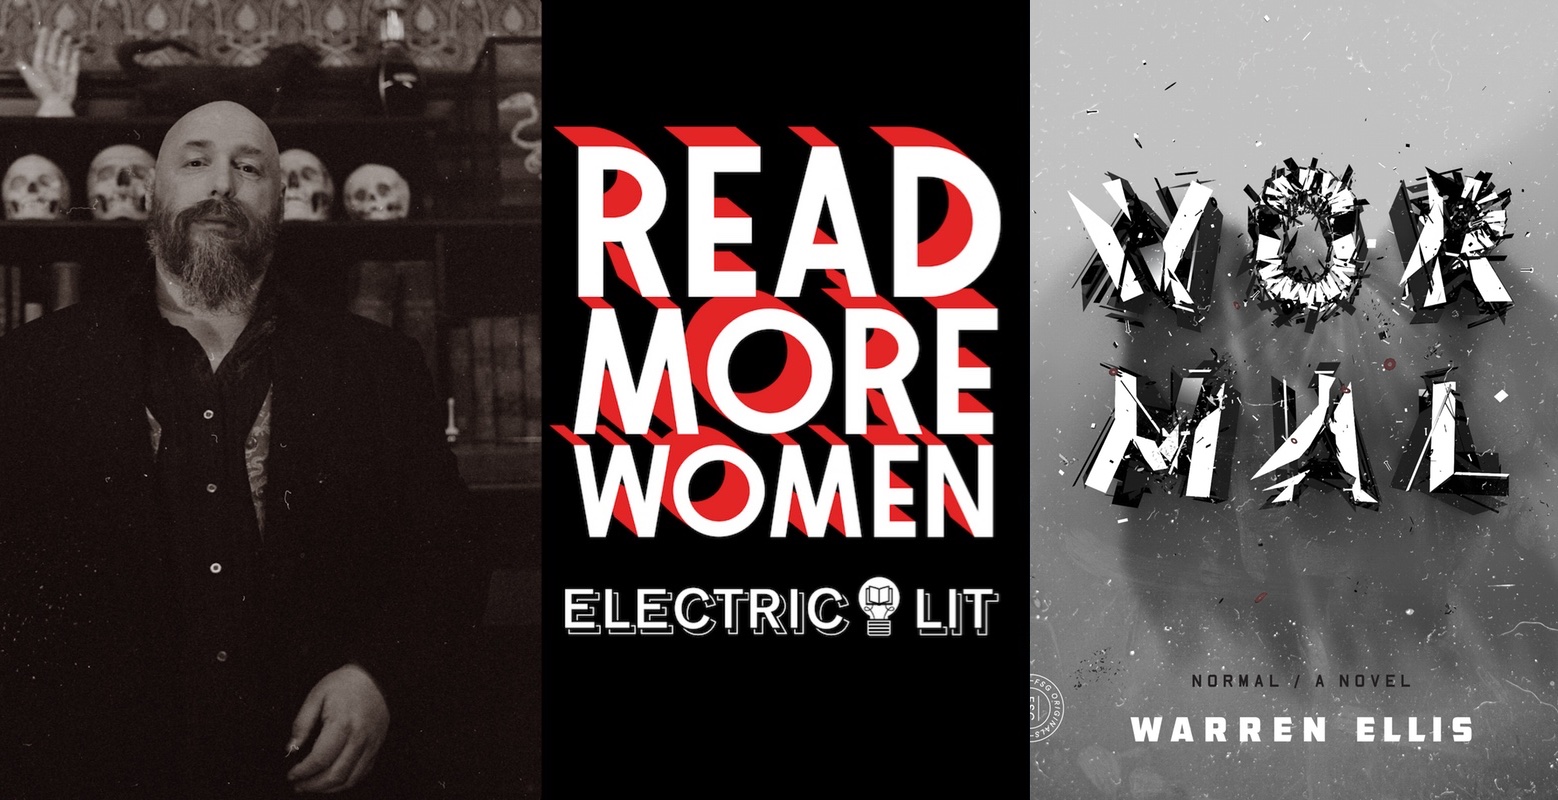 Warren Ellis for Electric Literature's Read More Women series